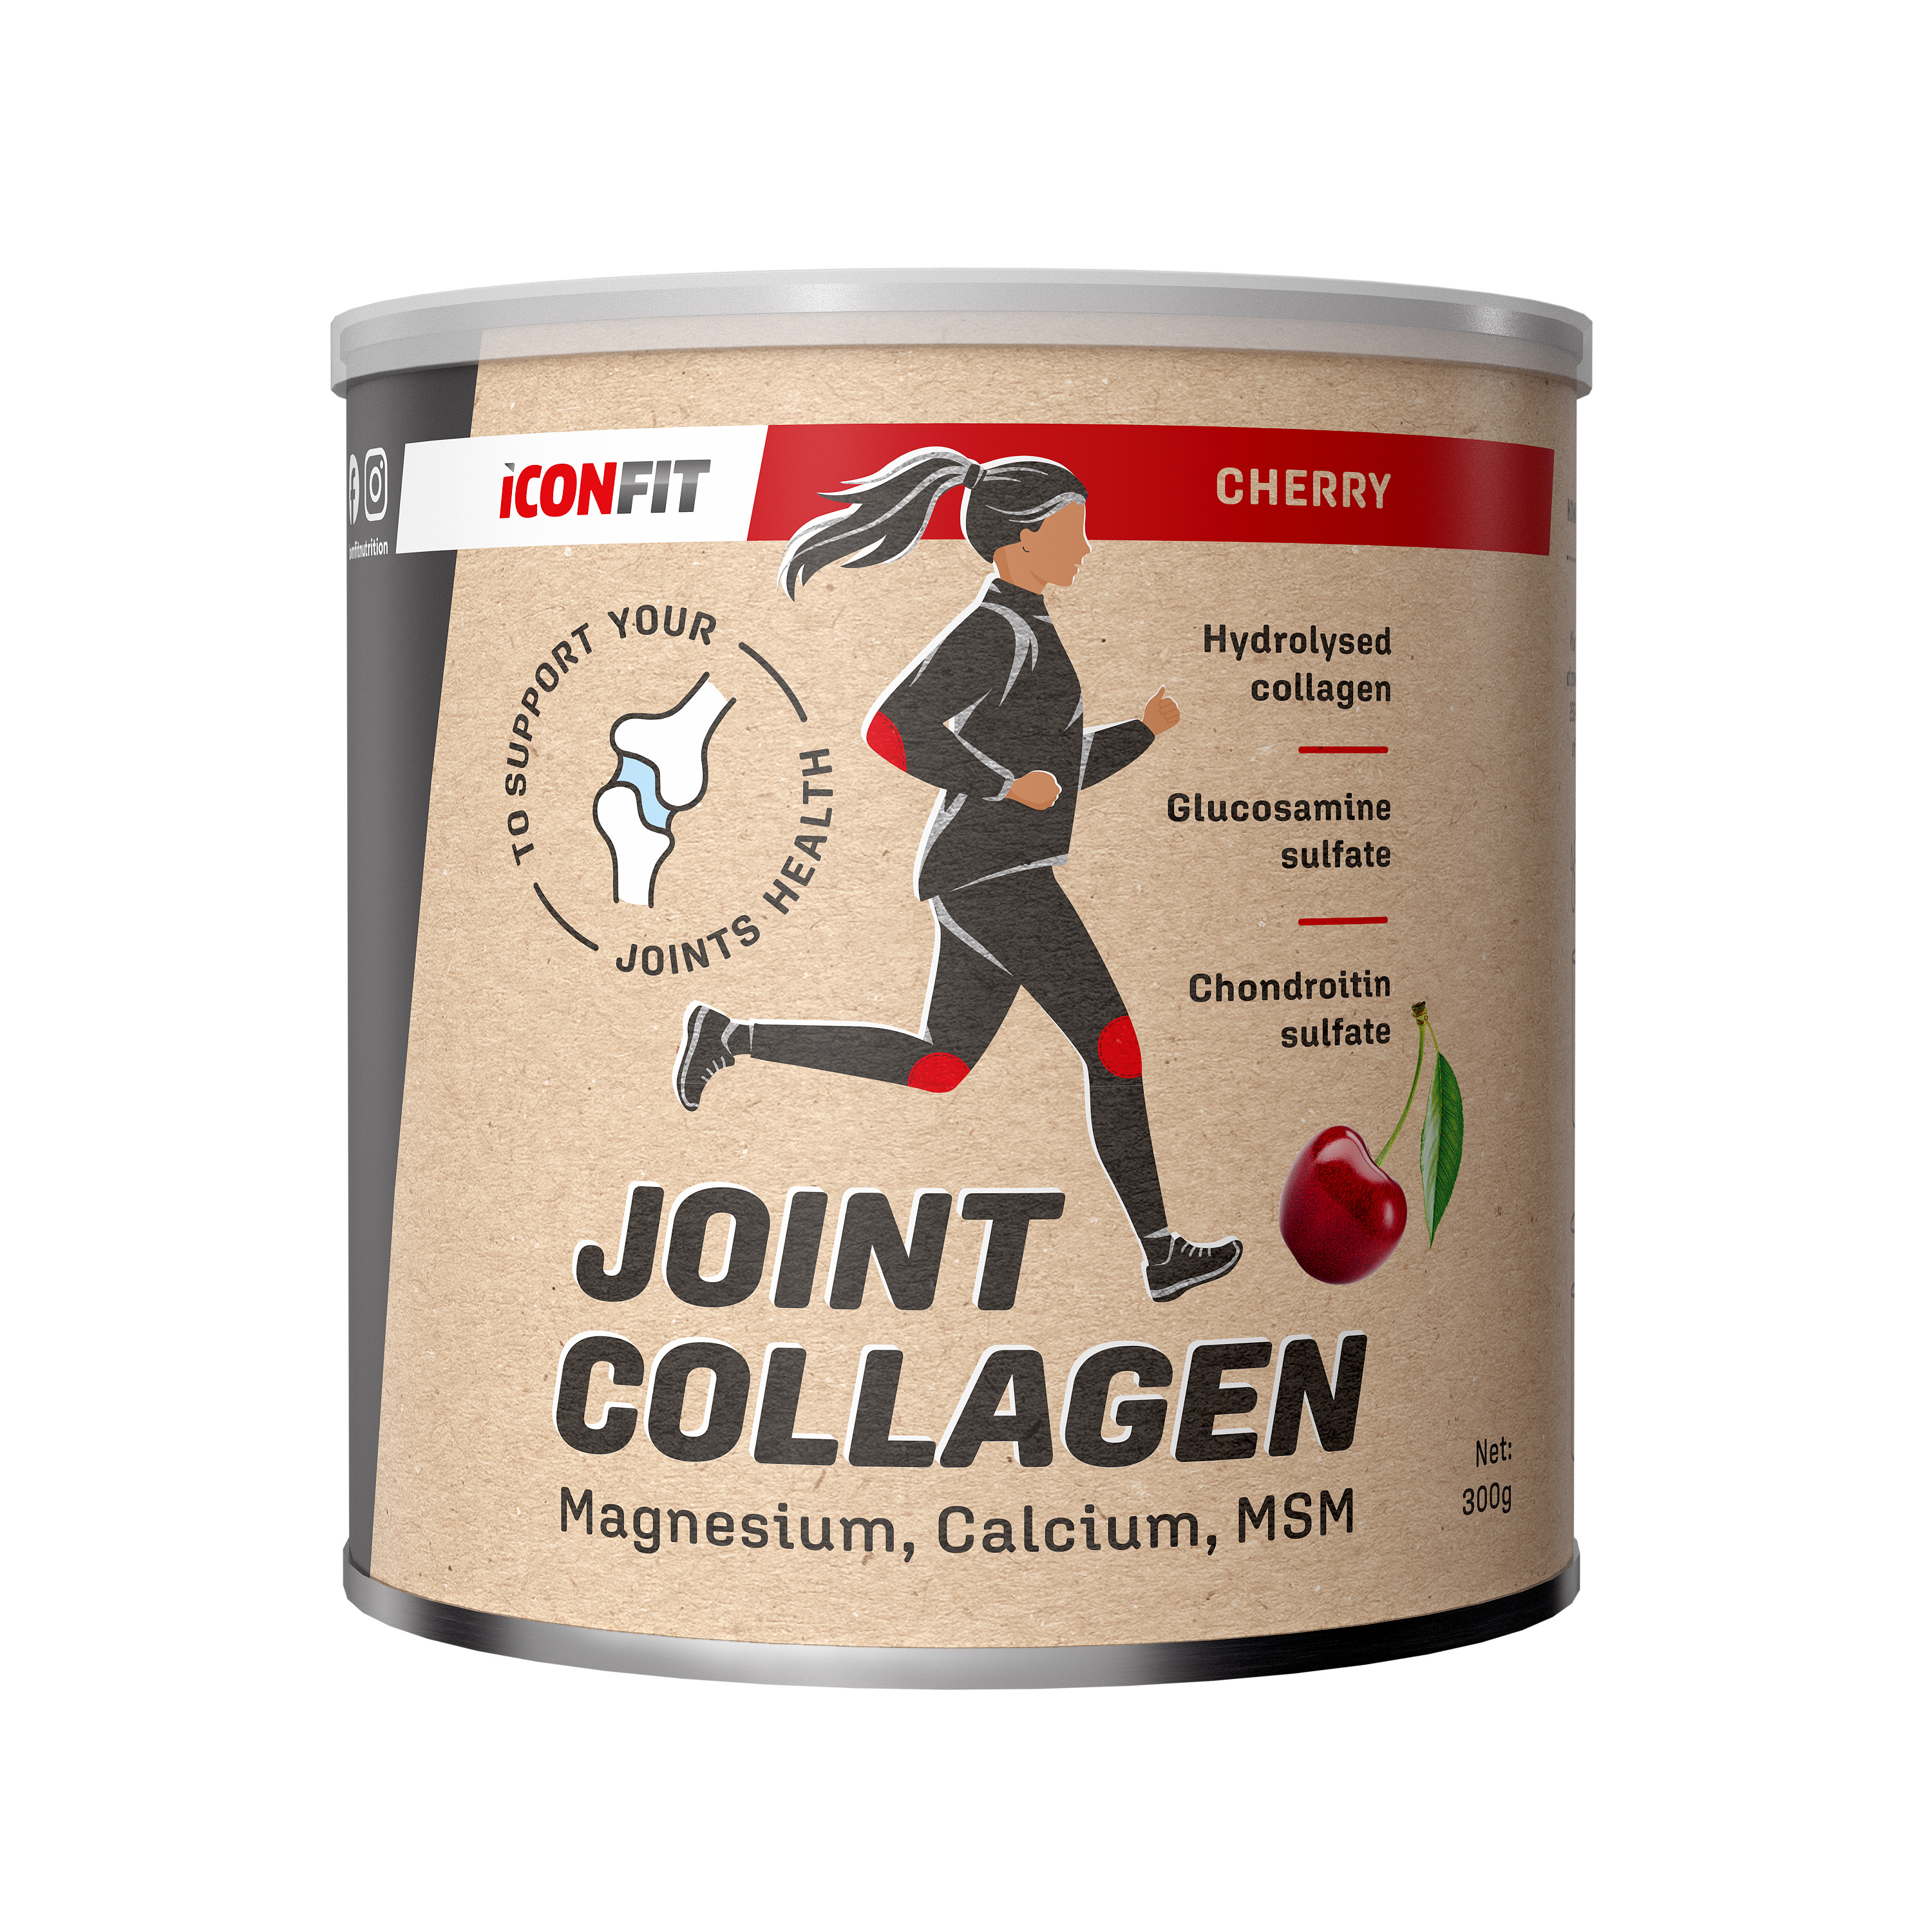 ICONFIT-Joint-Collagen-Cherry-300g